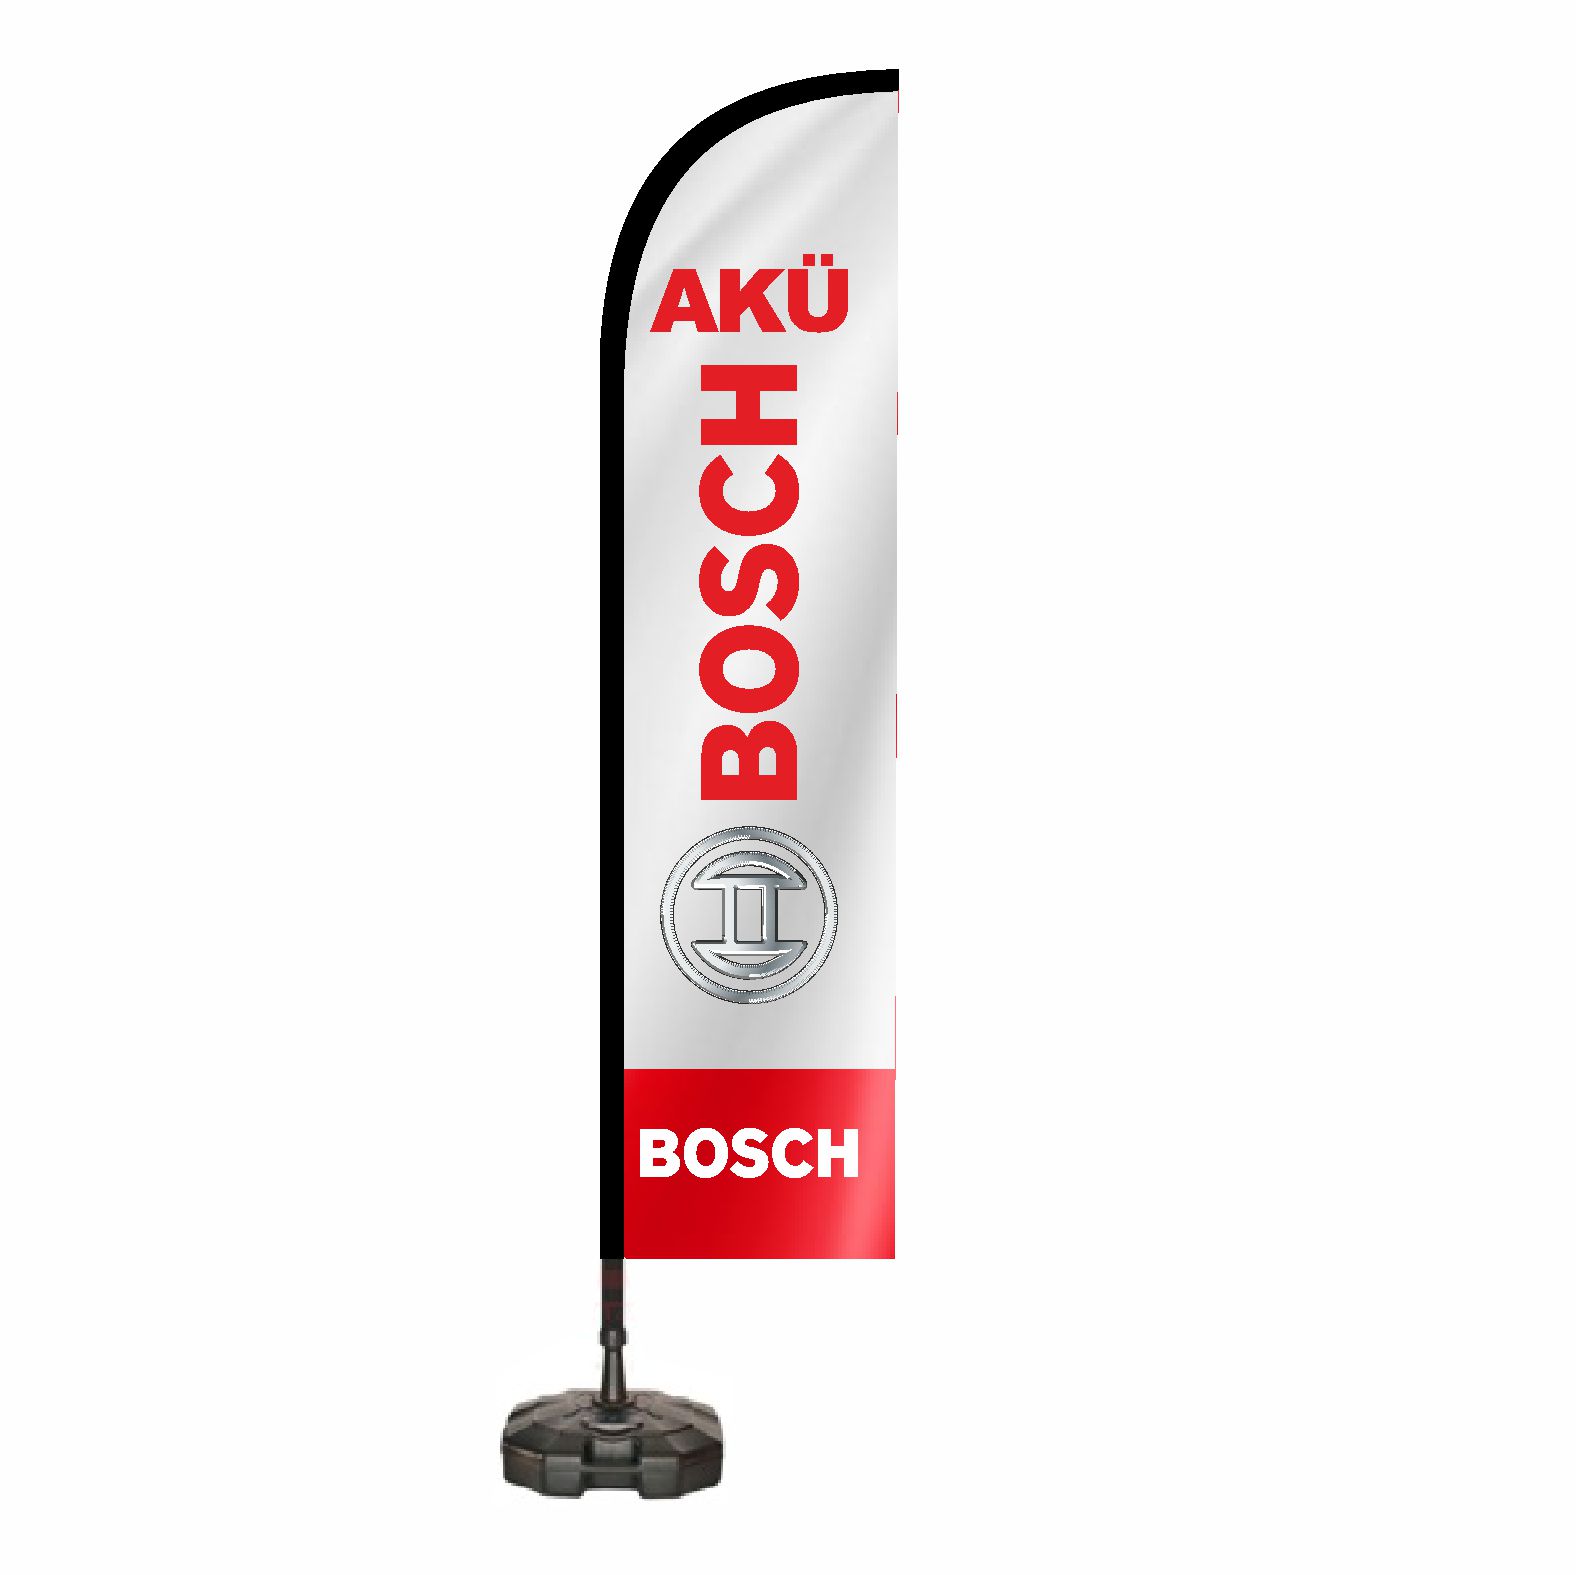 Bosch Ak Plaj Bayraklar Fiyat